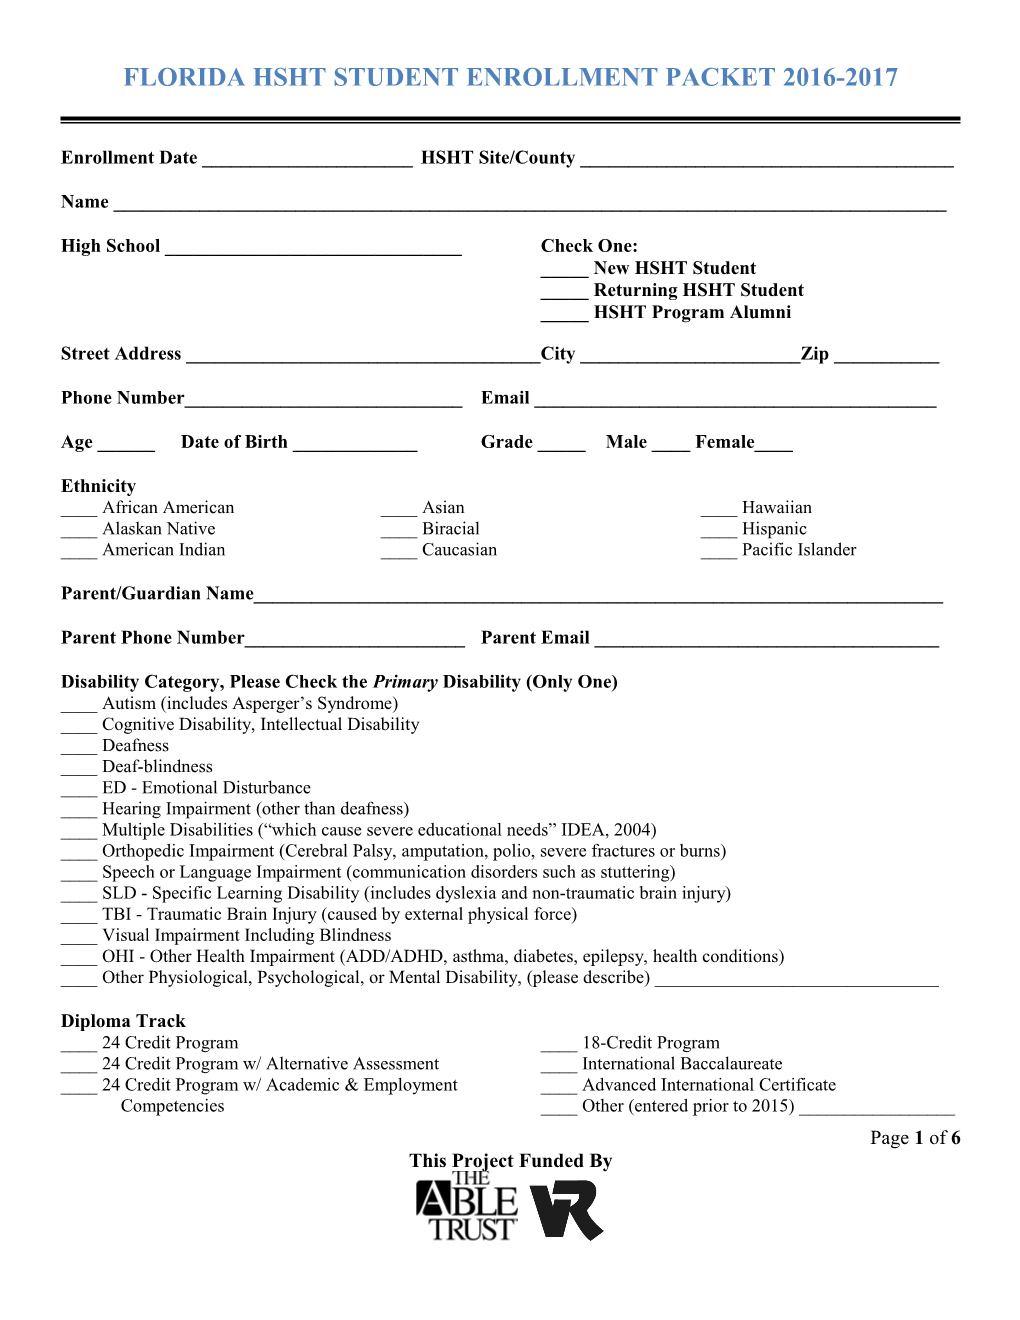 Florida Hs/Ht Student Enrollment Form 2011-2012